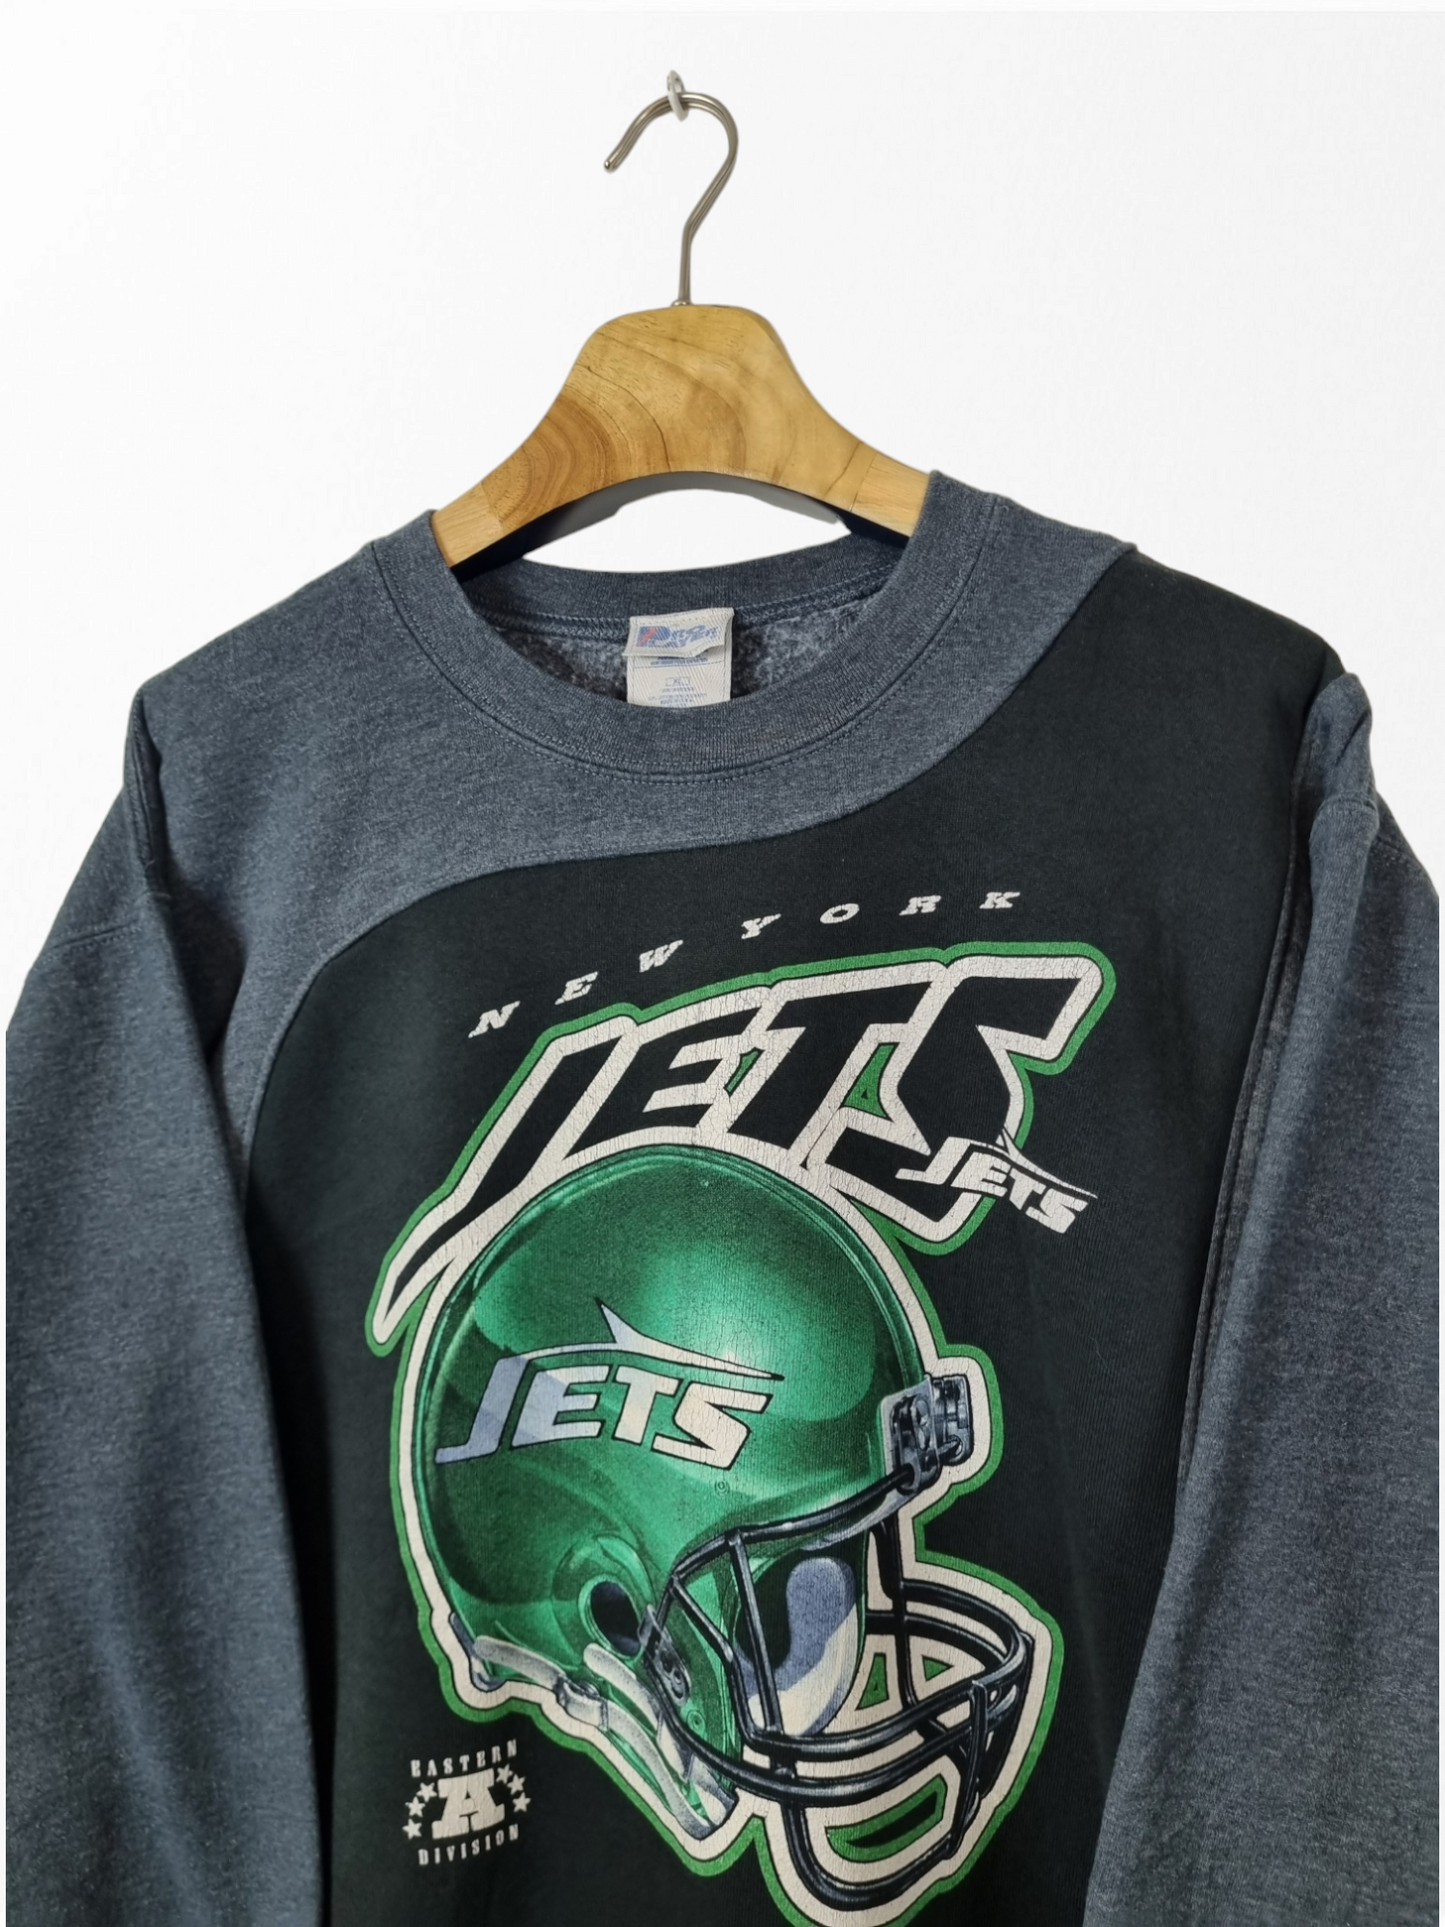 New york jets sweater maat M